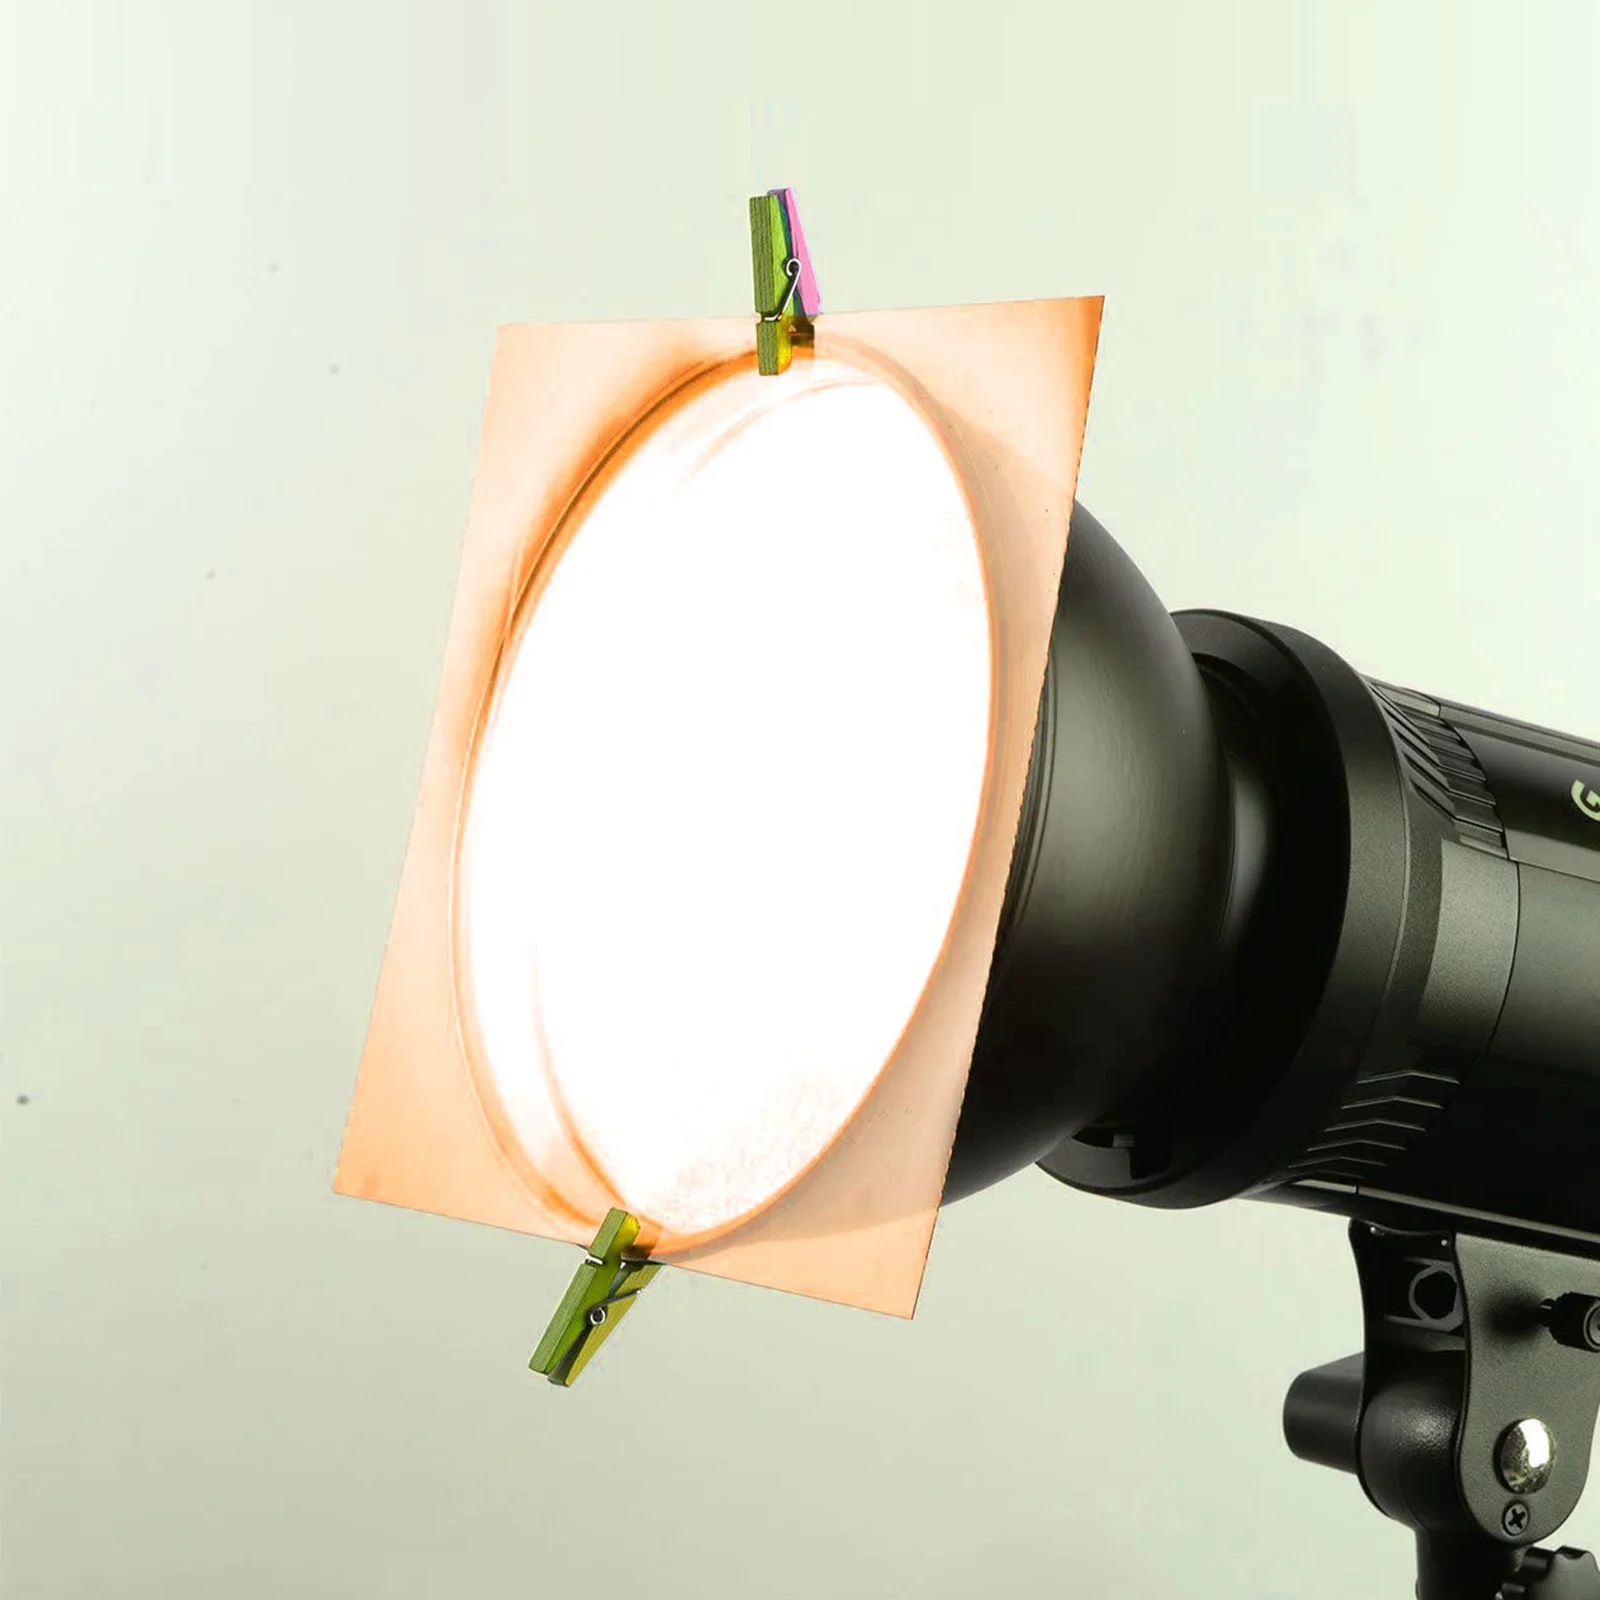 6pcs Correction Film Photographic Film Light Diffuser Films Lighting Filter Kit Light Dimming Sheets enlarge